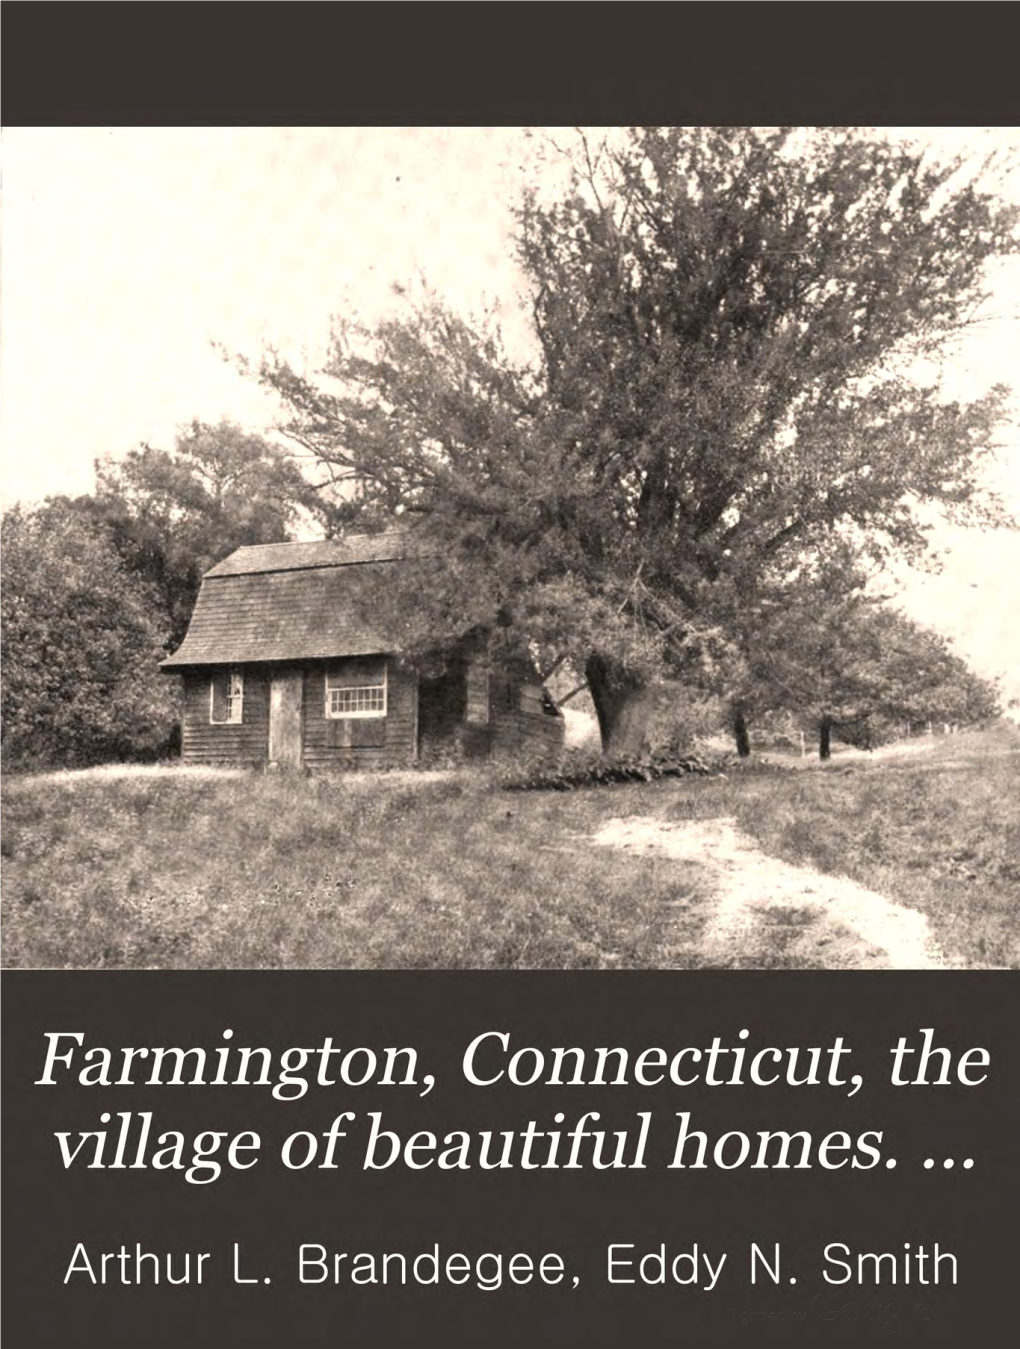 Farmington, the Village of Beautiful Homes" 1906